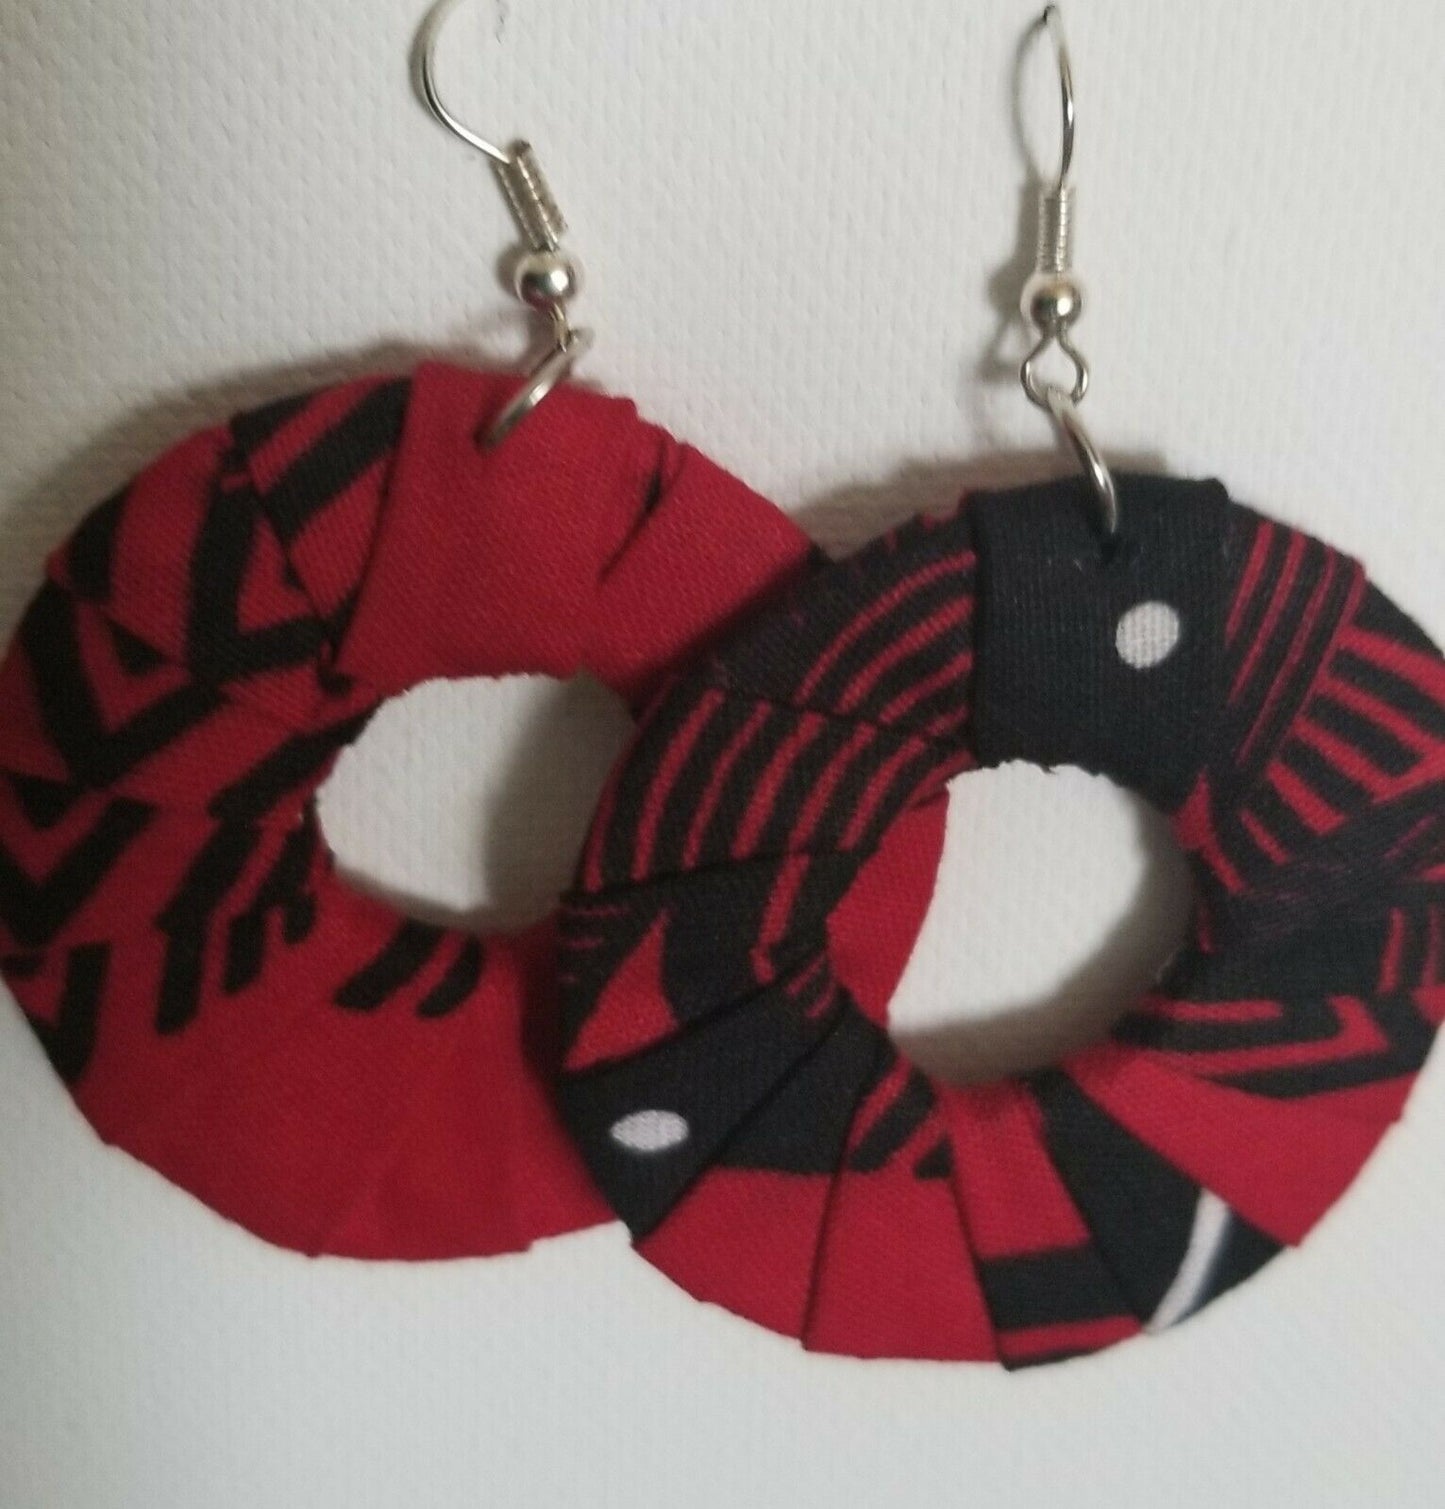 African Earrings Fabric Handmade with Tribal Ankara/waxprint 2pairs $8